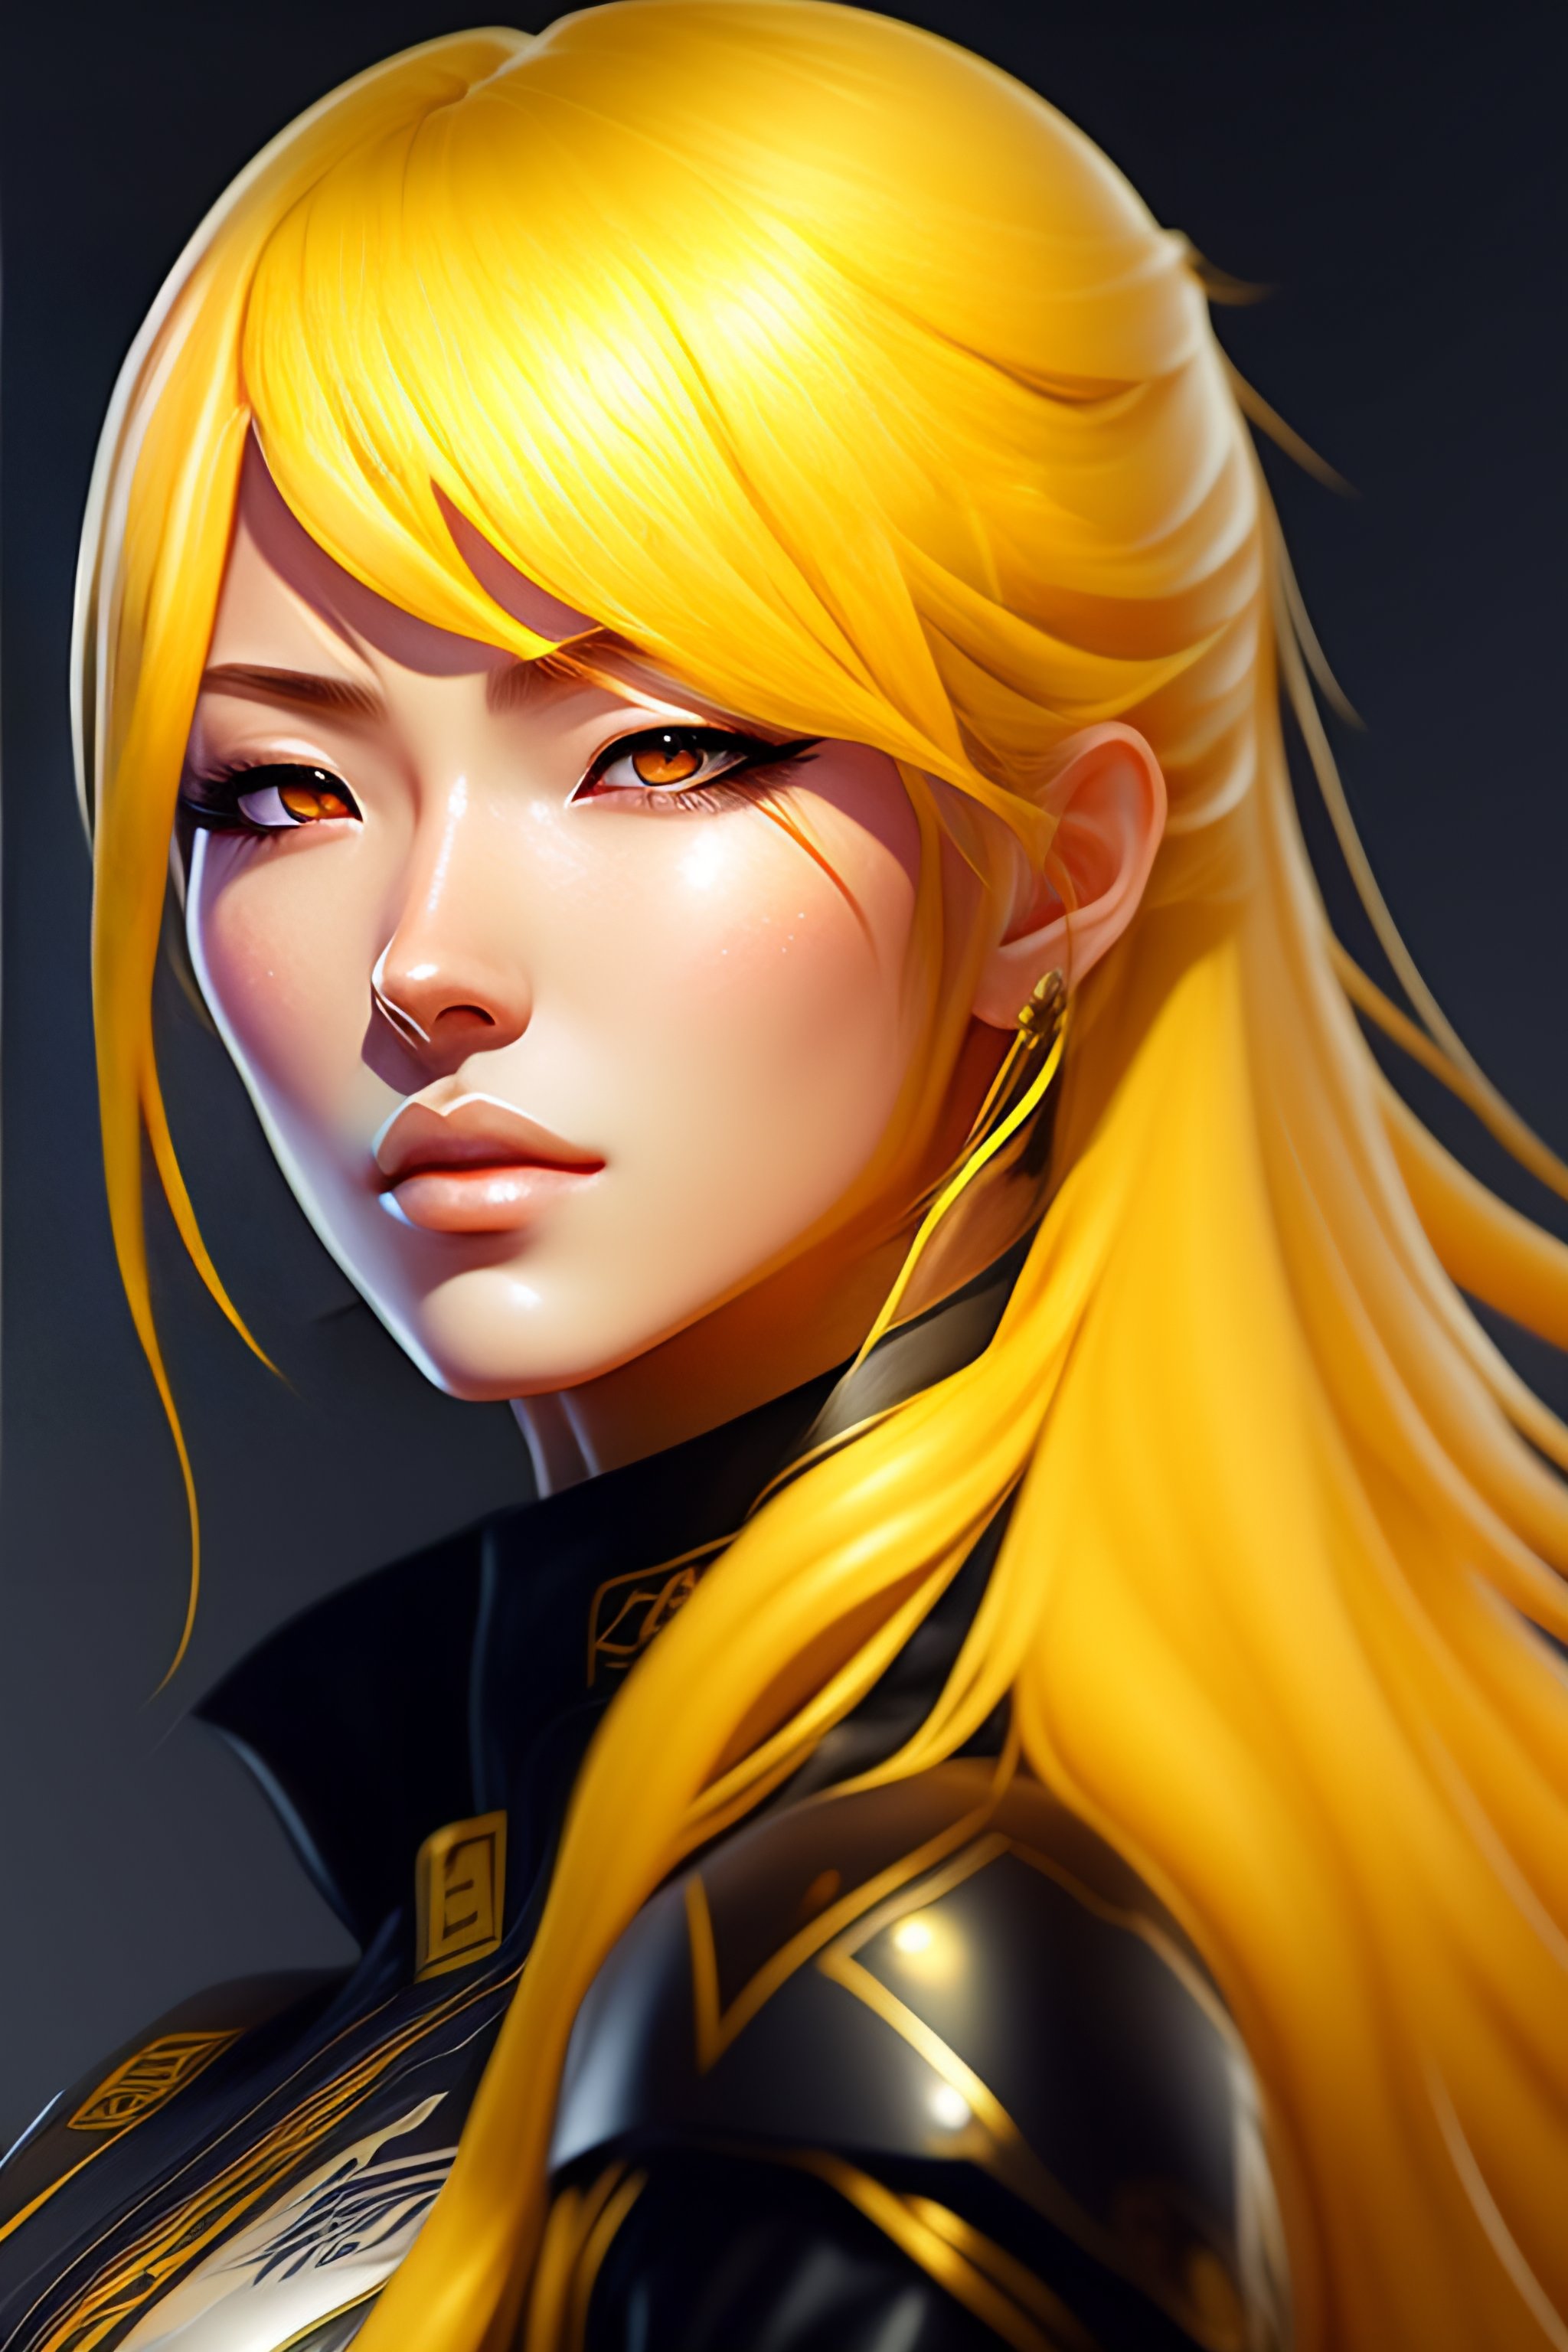 Lexica Portrait Of An Anime Girl Yellow Hair Midriff Symmetrical Facial Features Sharp